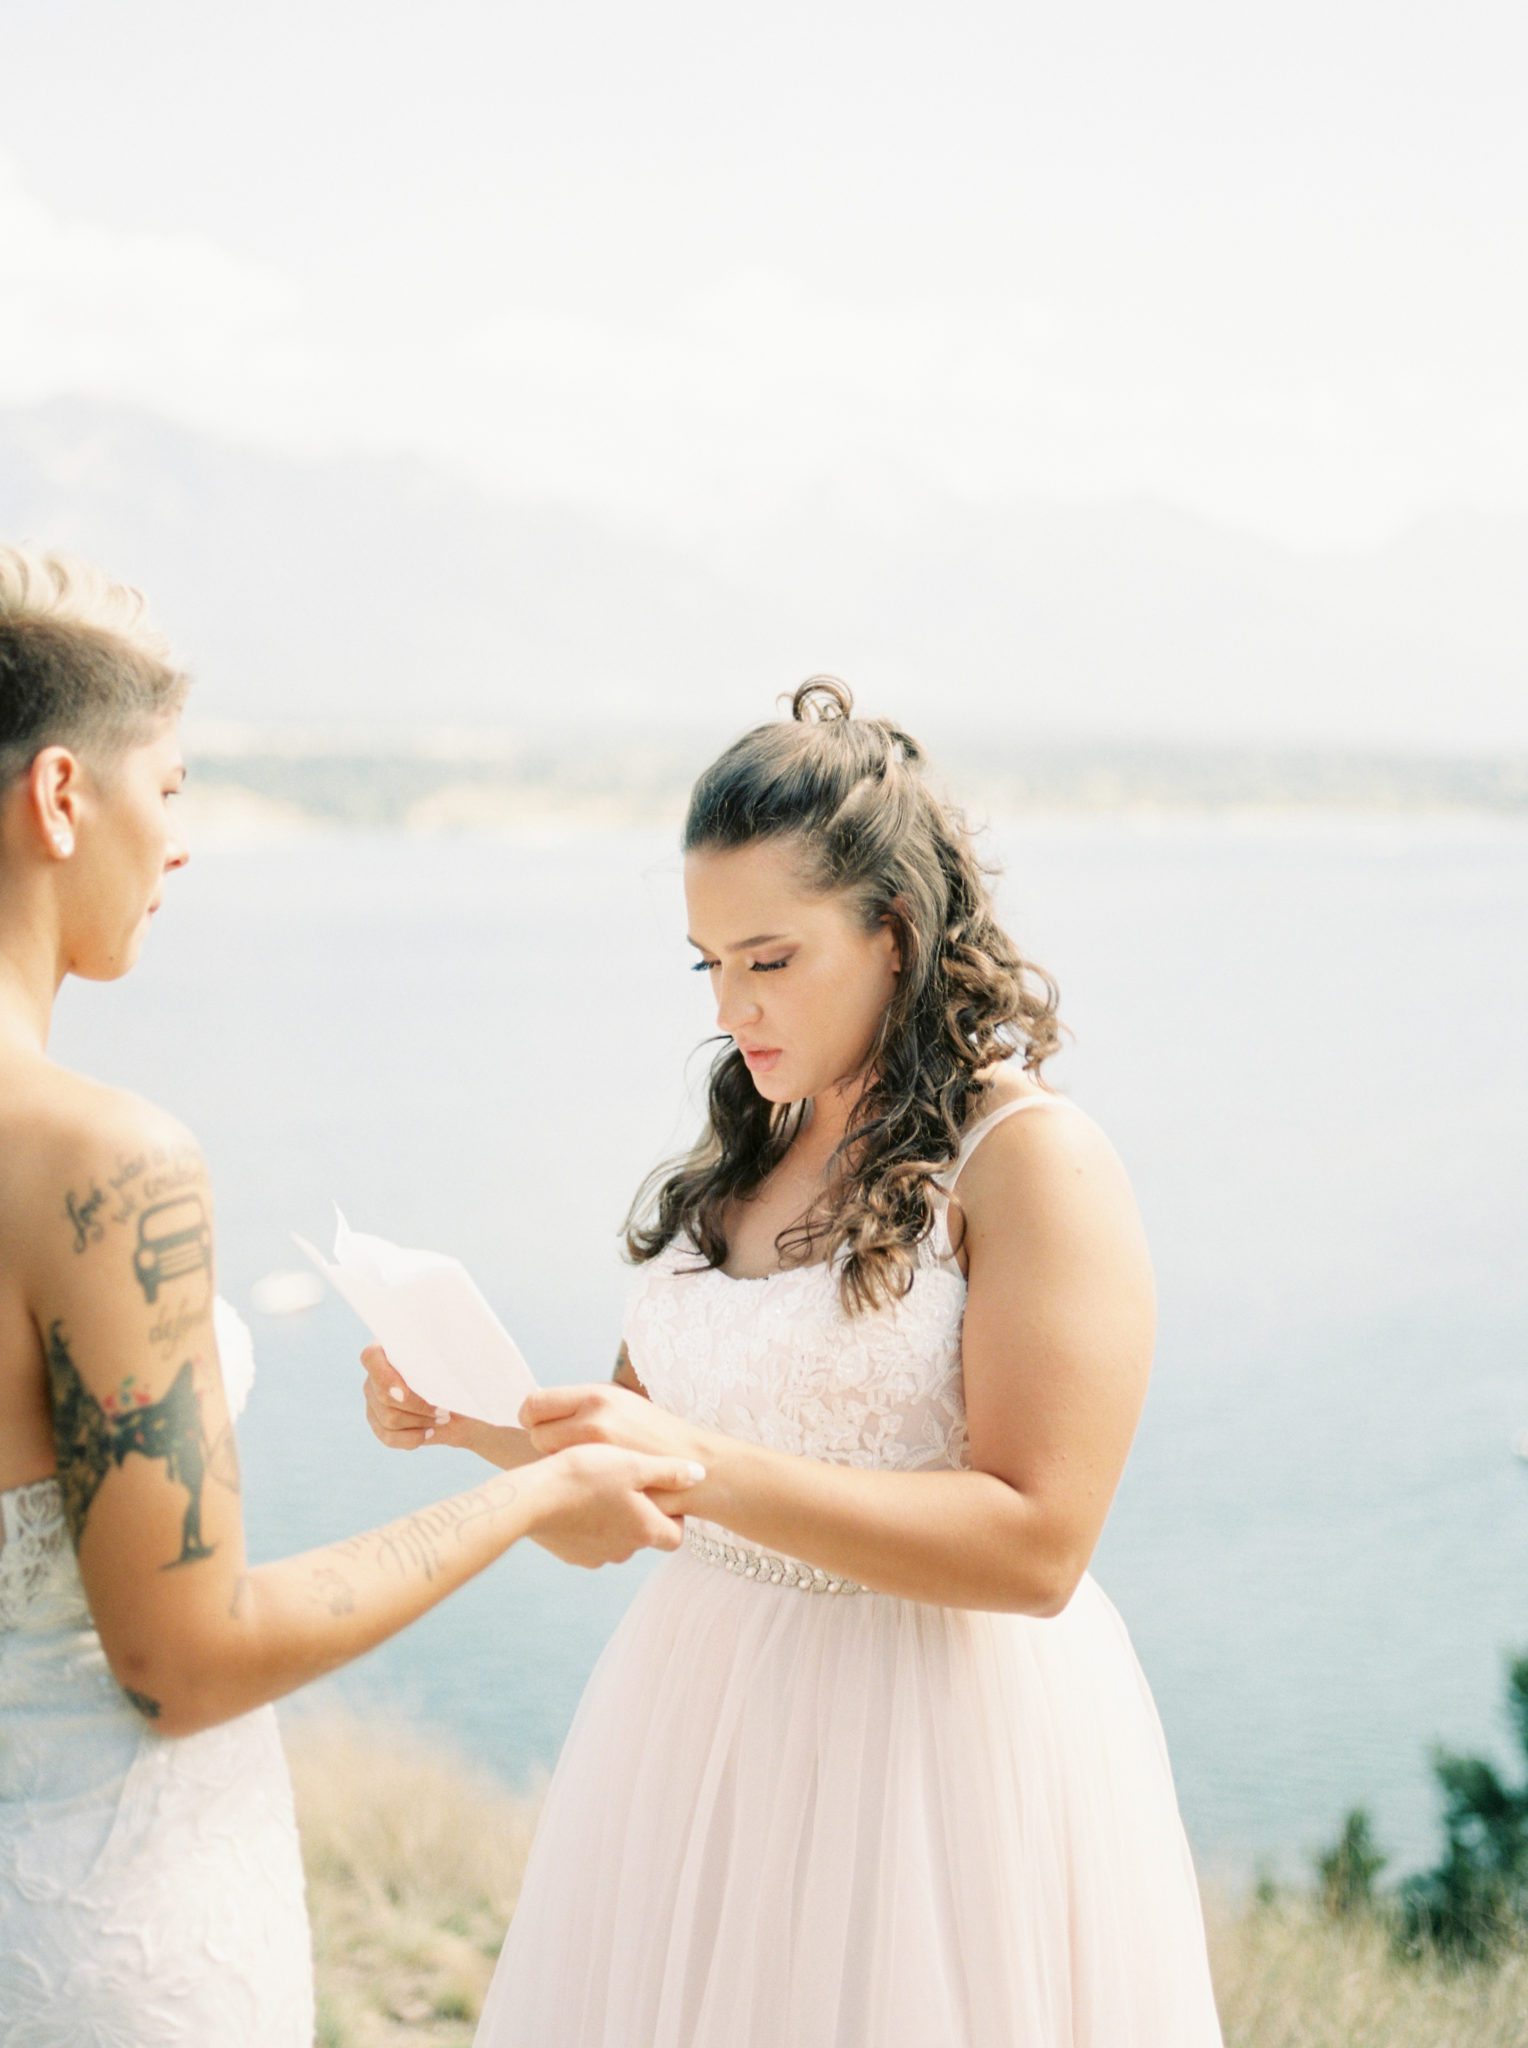 Brides exchange intimate wedding vows lakeside